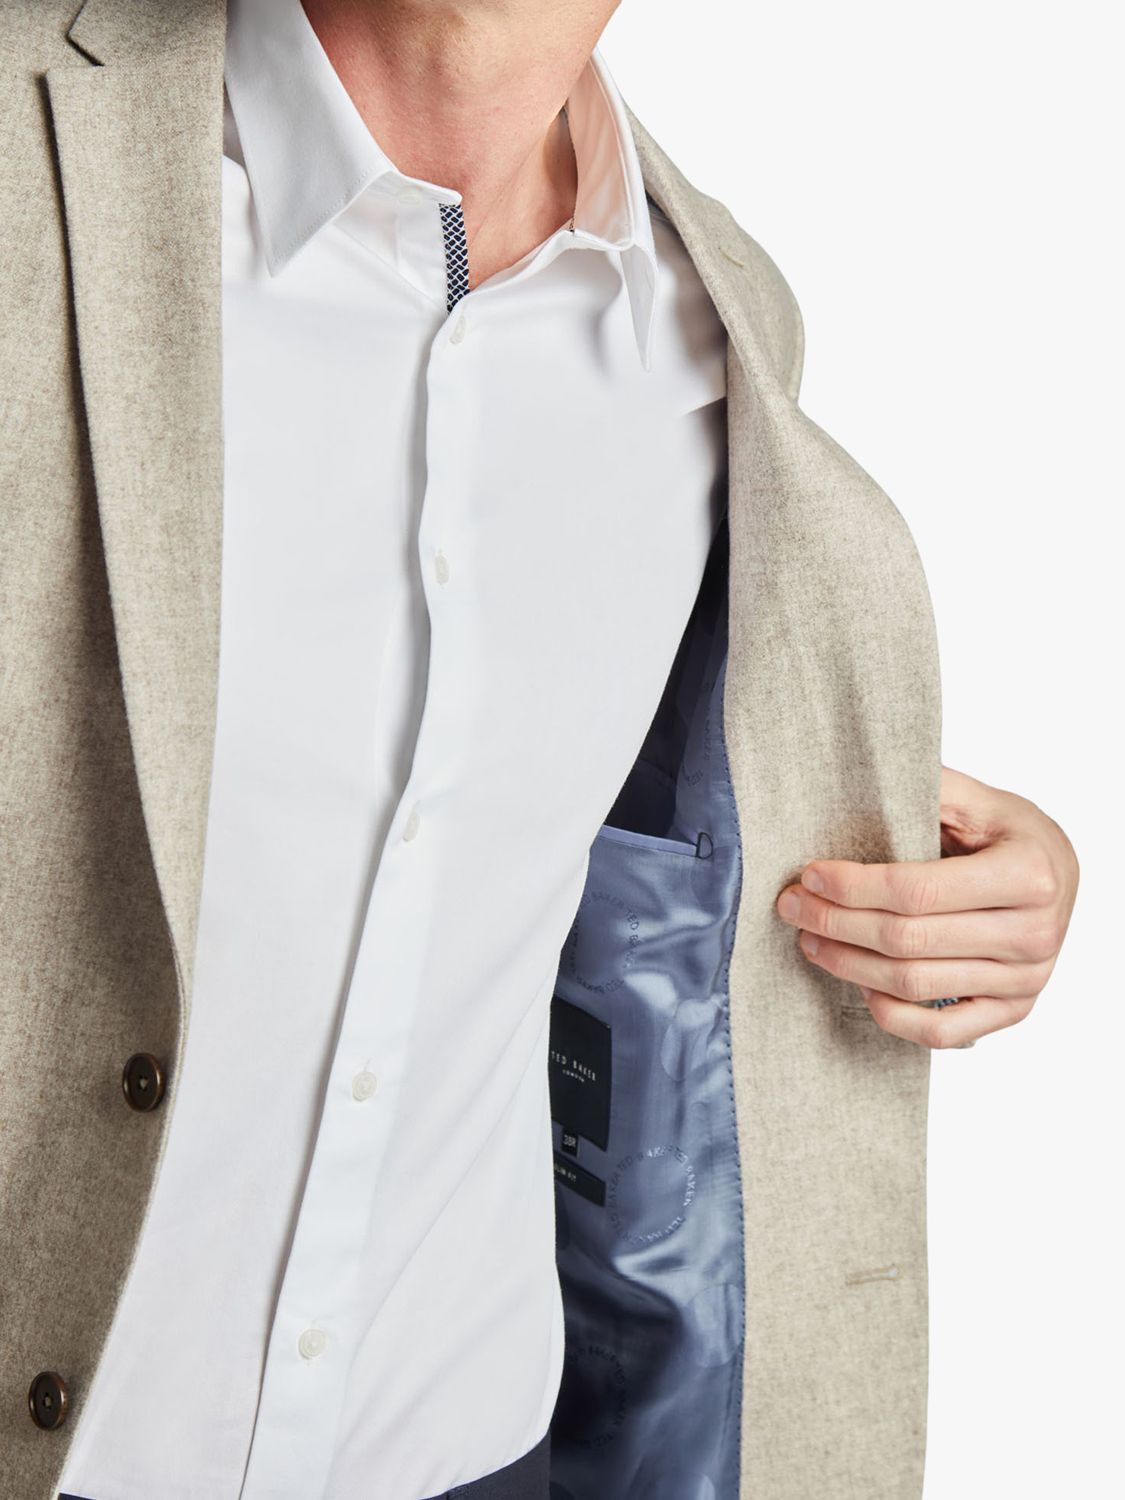 Ted Baker Apus Slim Fit Wool Blend Suit Jacket, Oatmeal, 38R